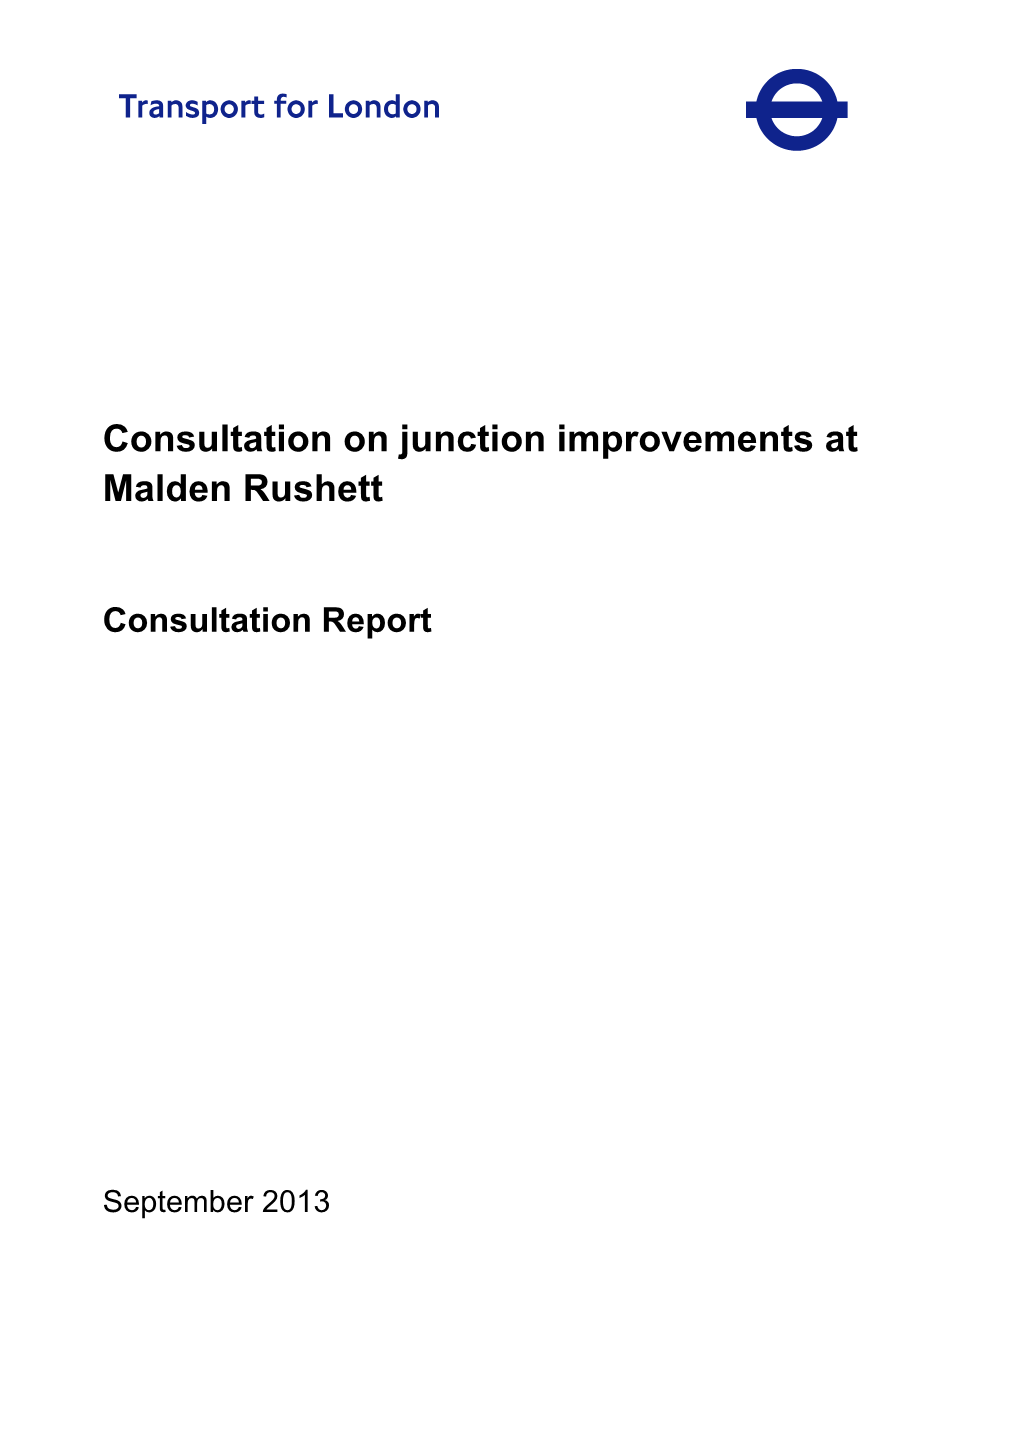 Consultation on Junction Improvements at Malden Rushett